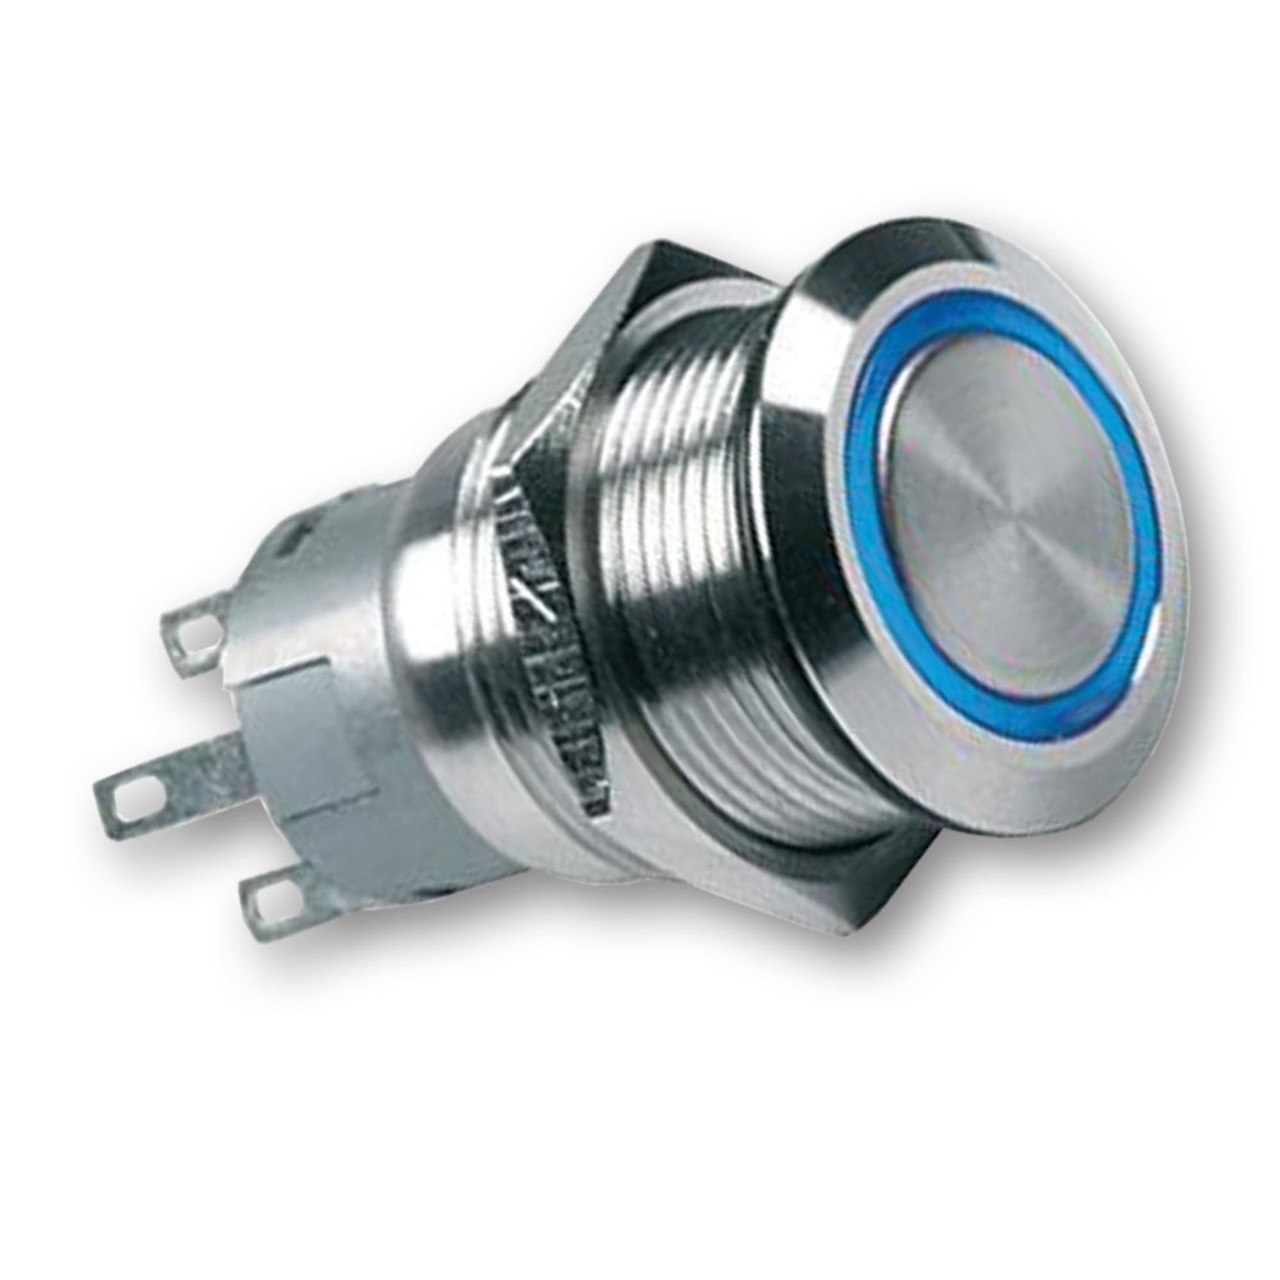 Mega LED - Push Button - Waterproof IP67, Stainless Steel, Momentary Illuminated, 24V, Green LED (32350-G24M) - Apollo Lighting